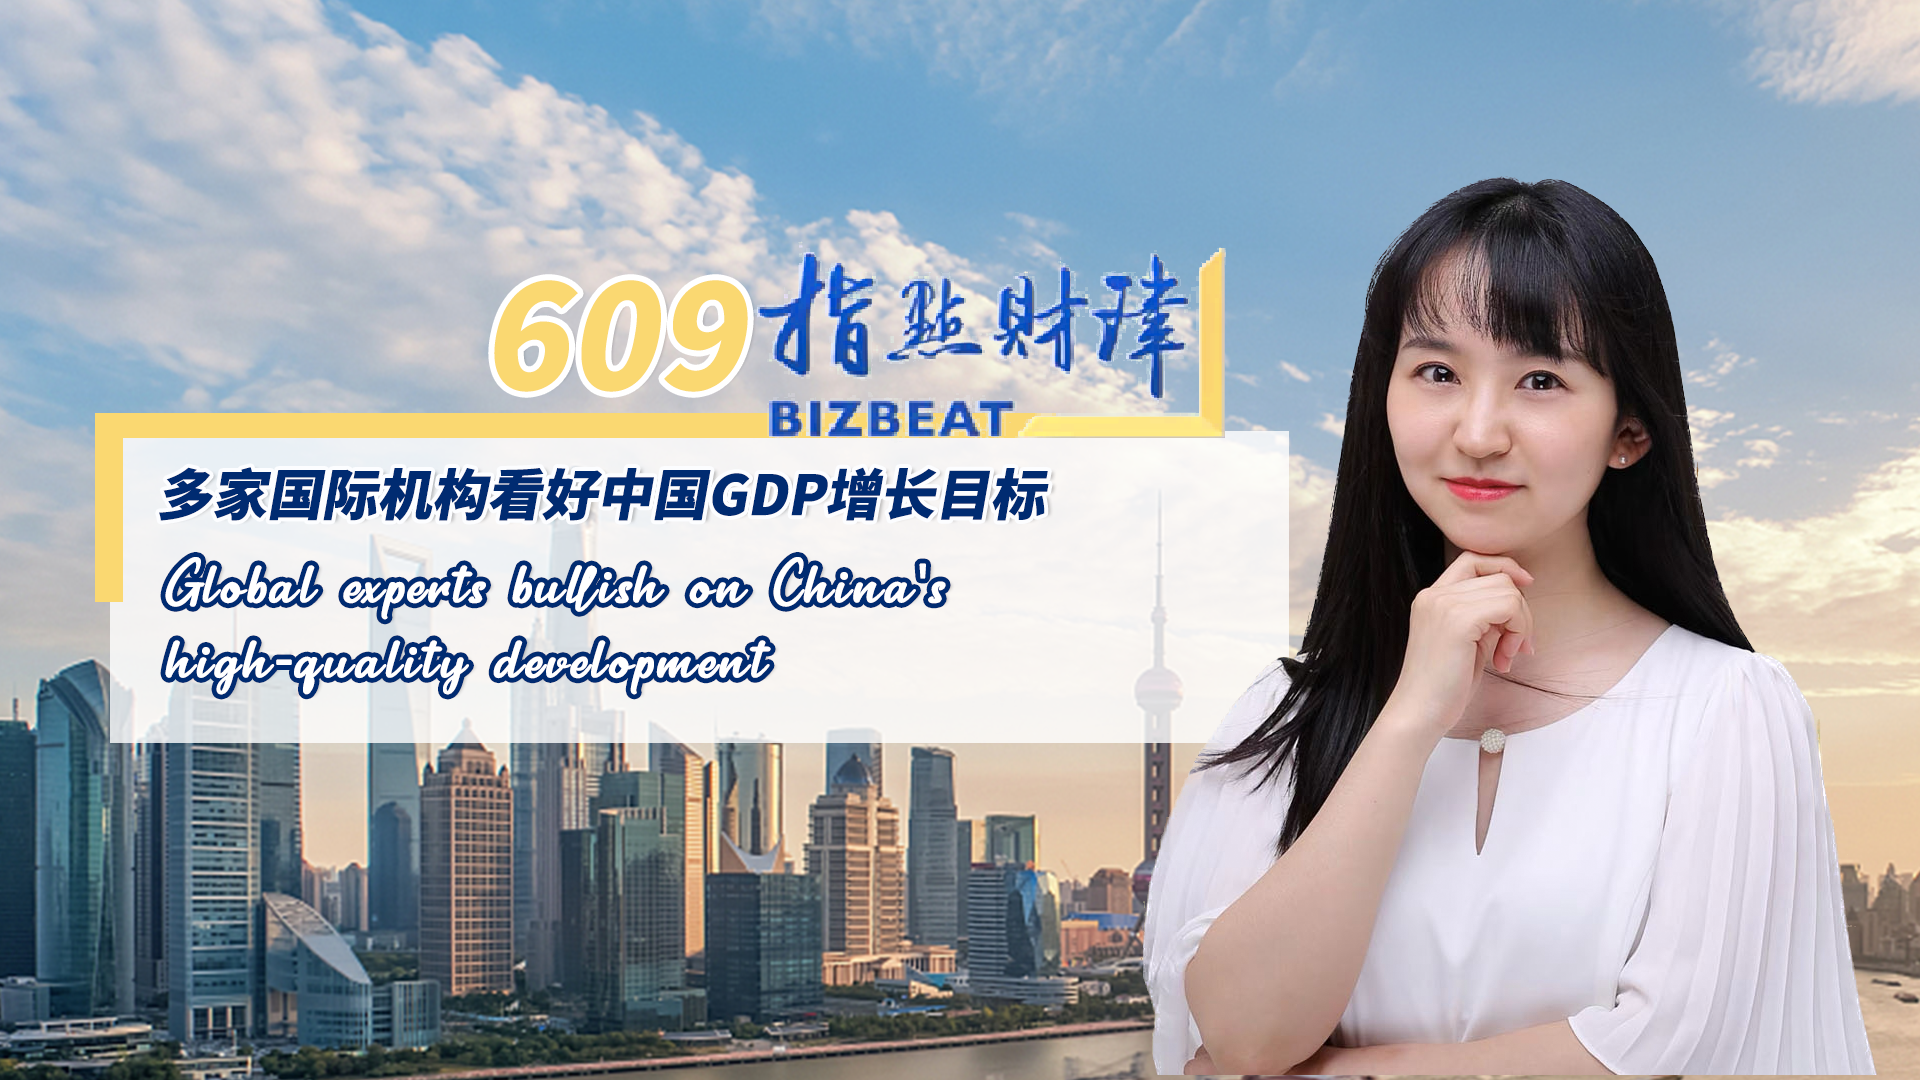 BizBeat: Global experts bullish on China's high-quality development